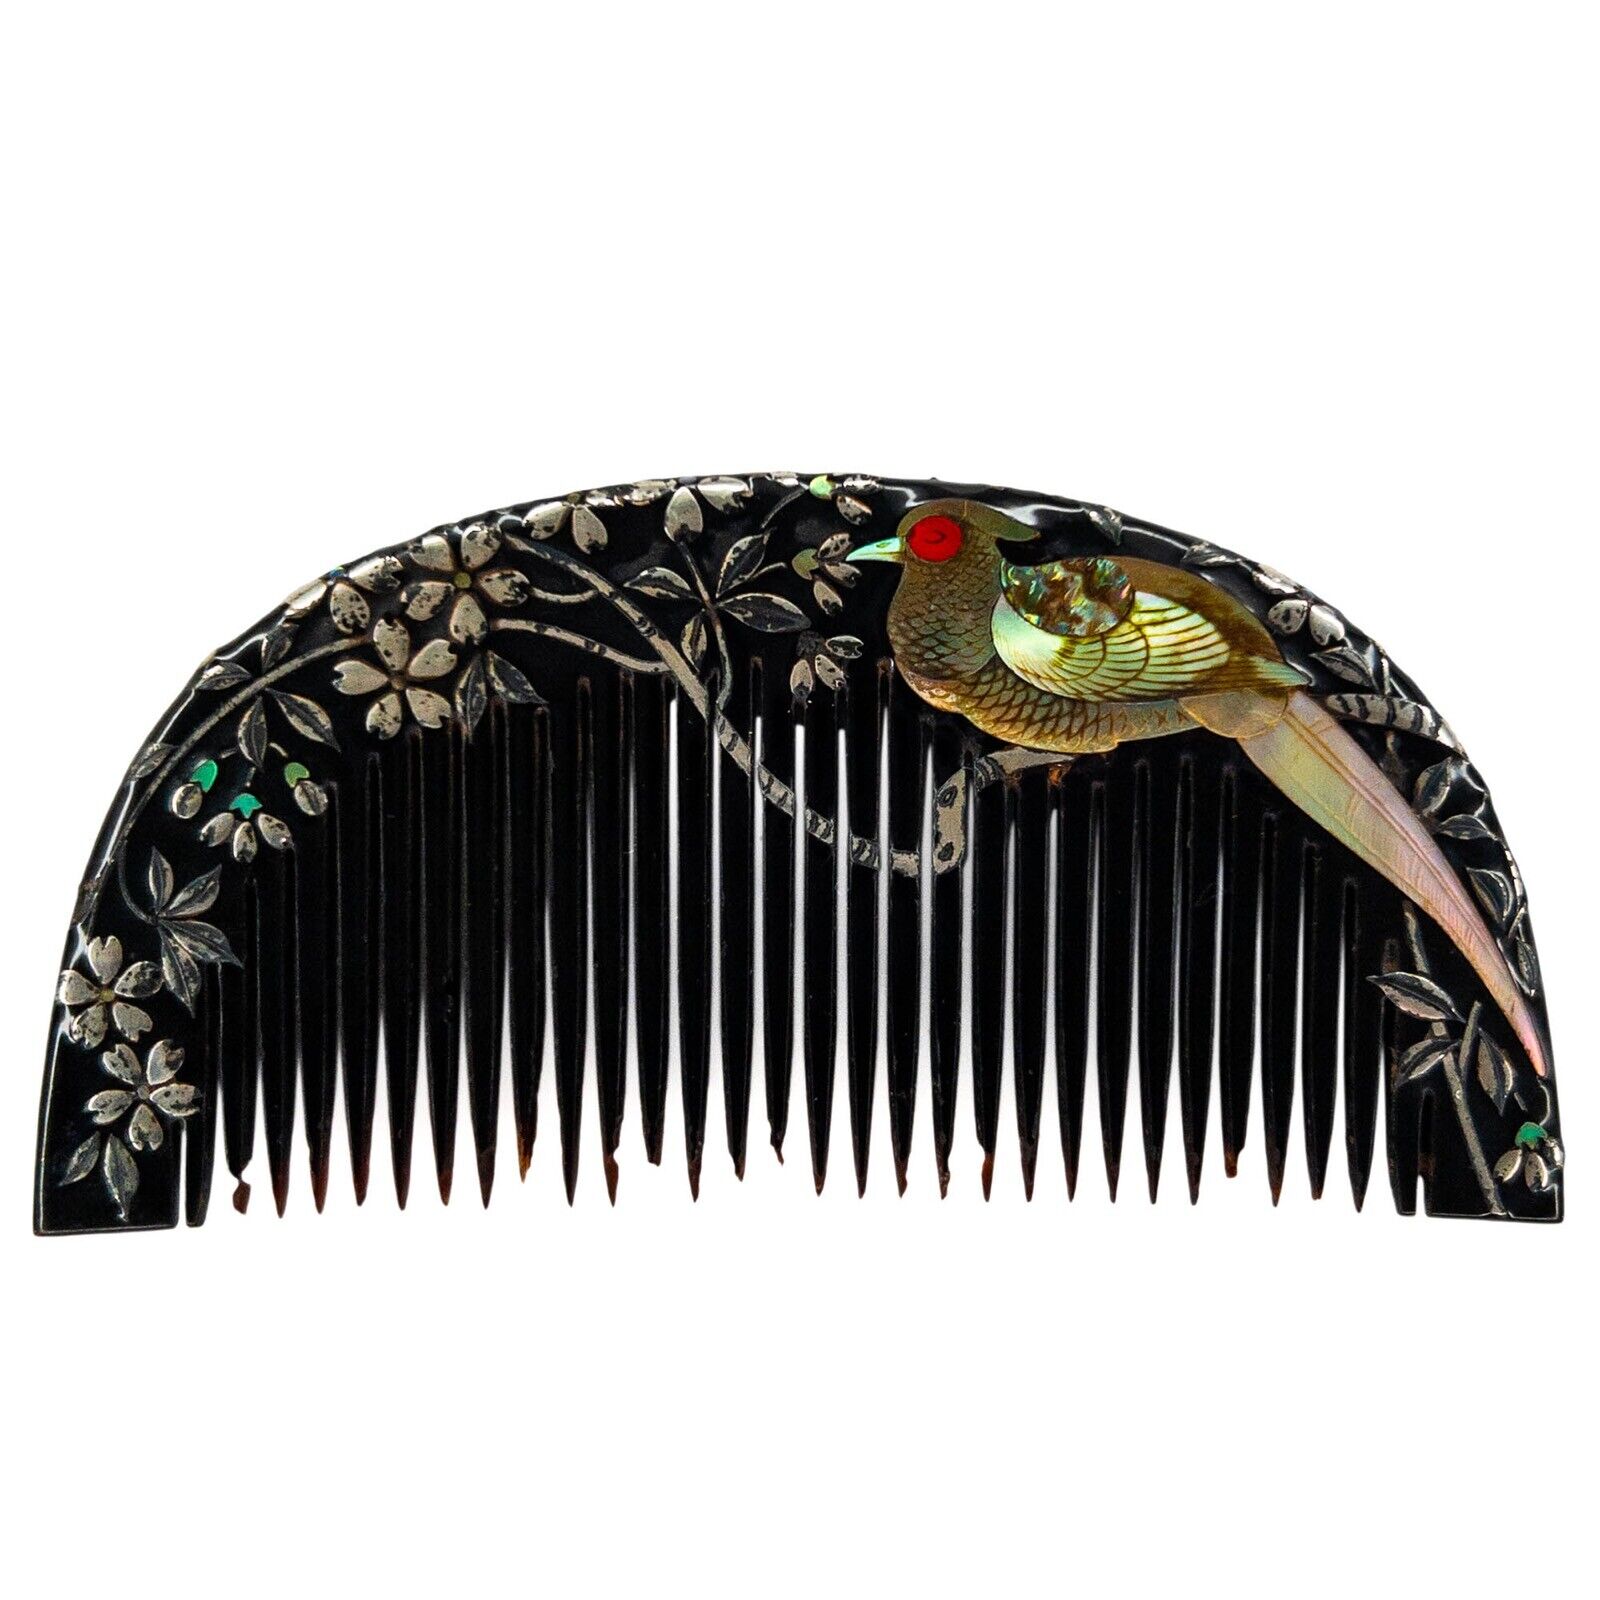 Vintage Japanese Inlayed Black Lacquer Kushi Kanzashi Hair Ornament: Sept23-K